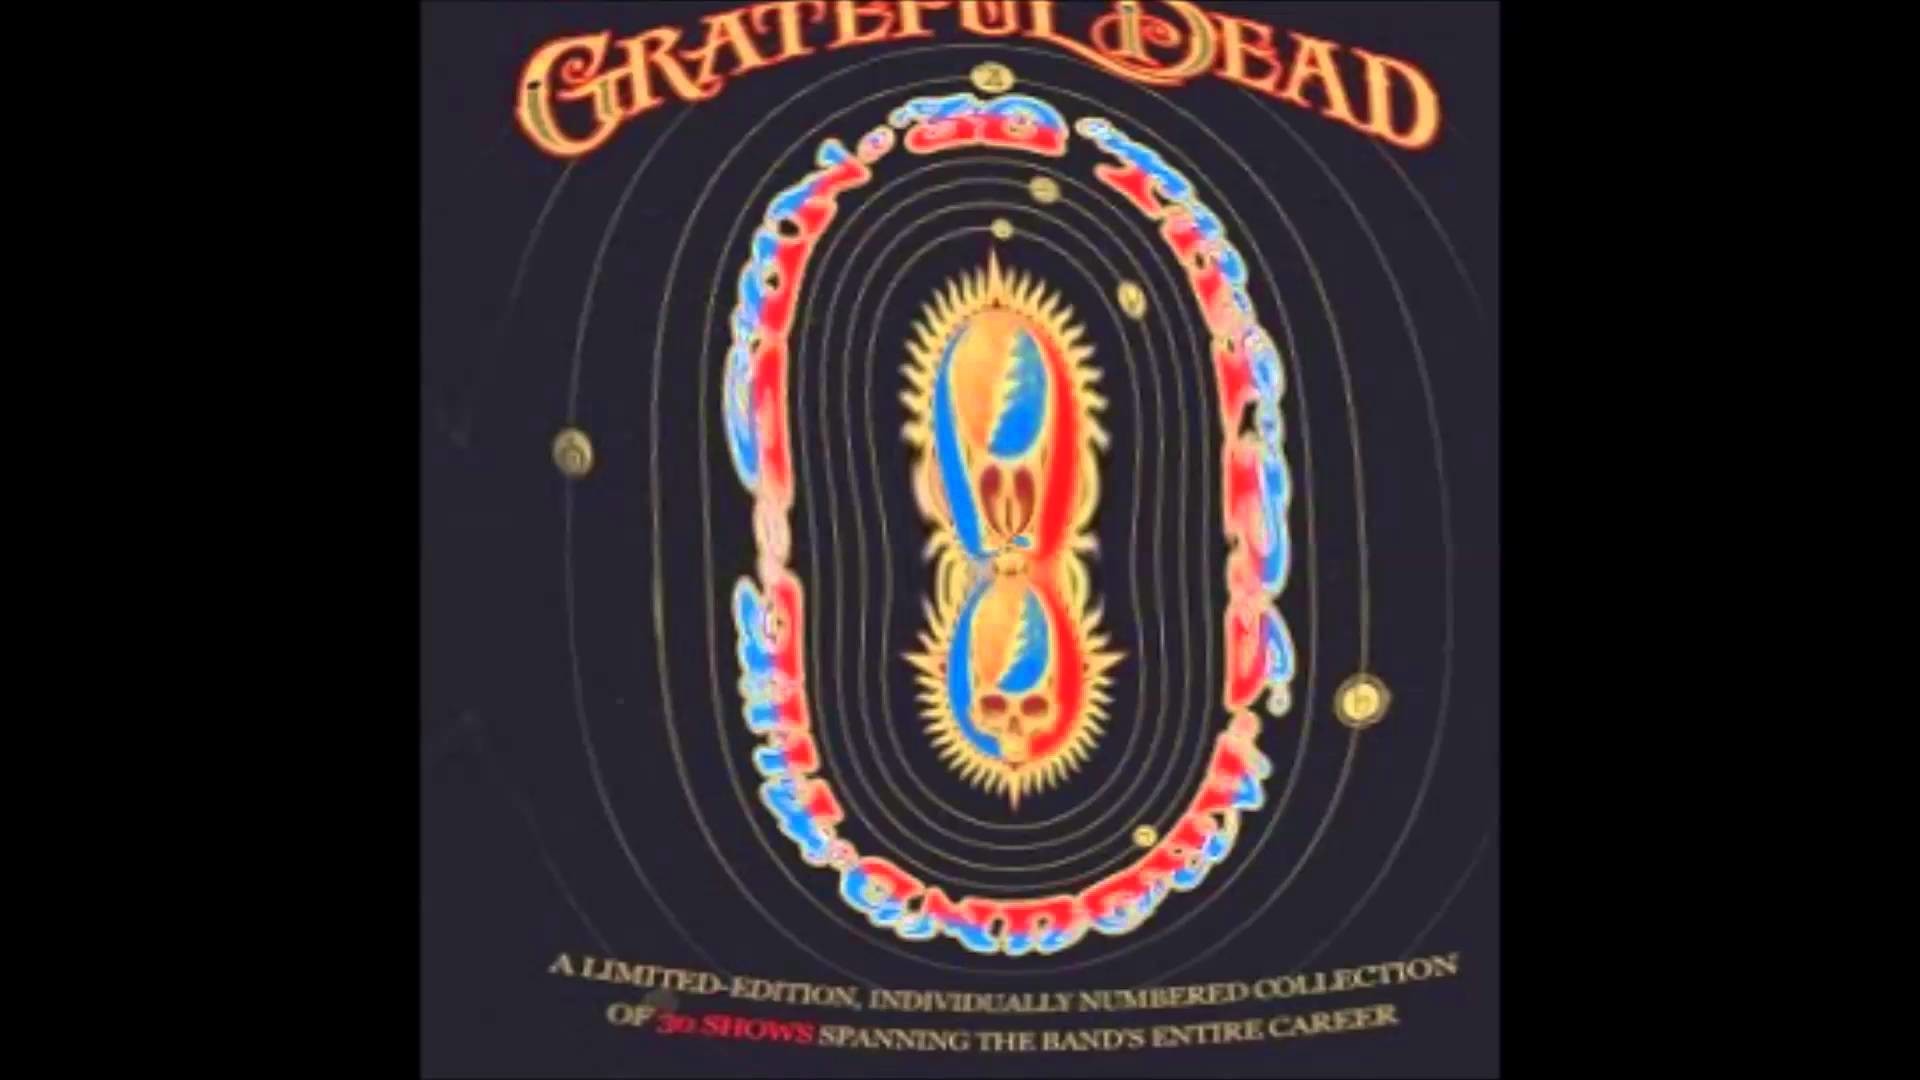 1920x1080 Grateful Dead - 30 Trips Around The Sun 10-01-94 (Disk 1) HDCD